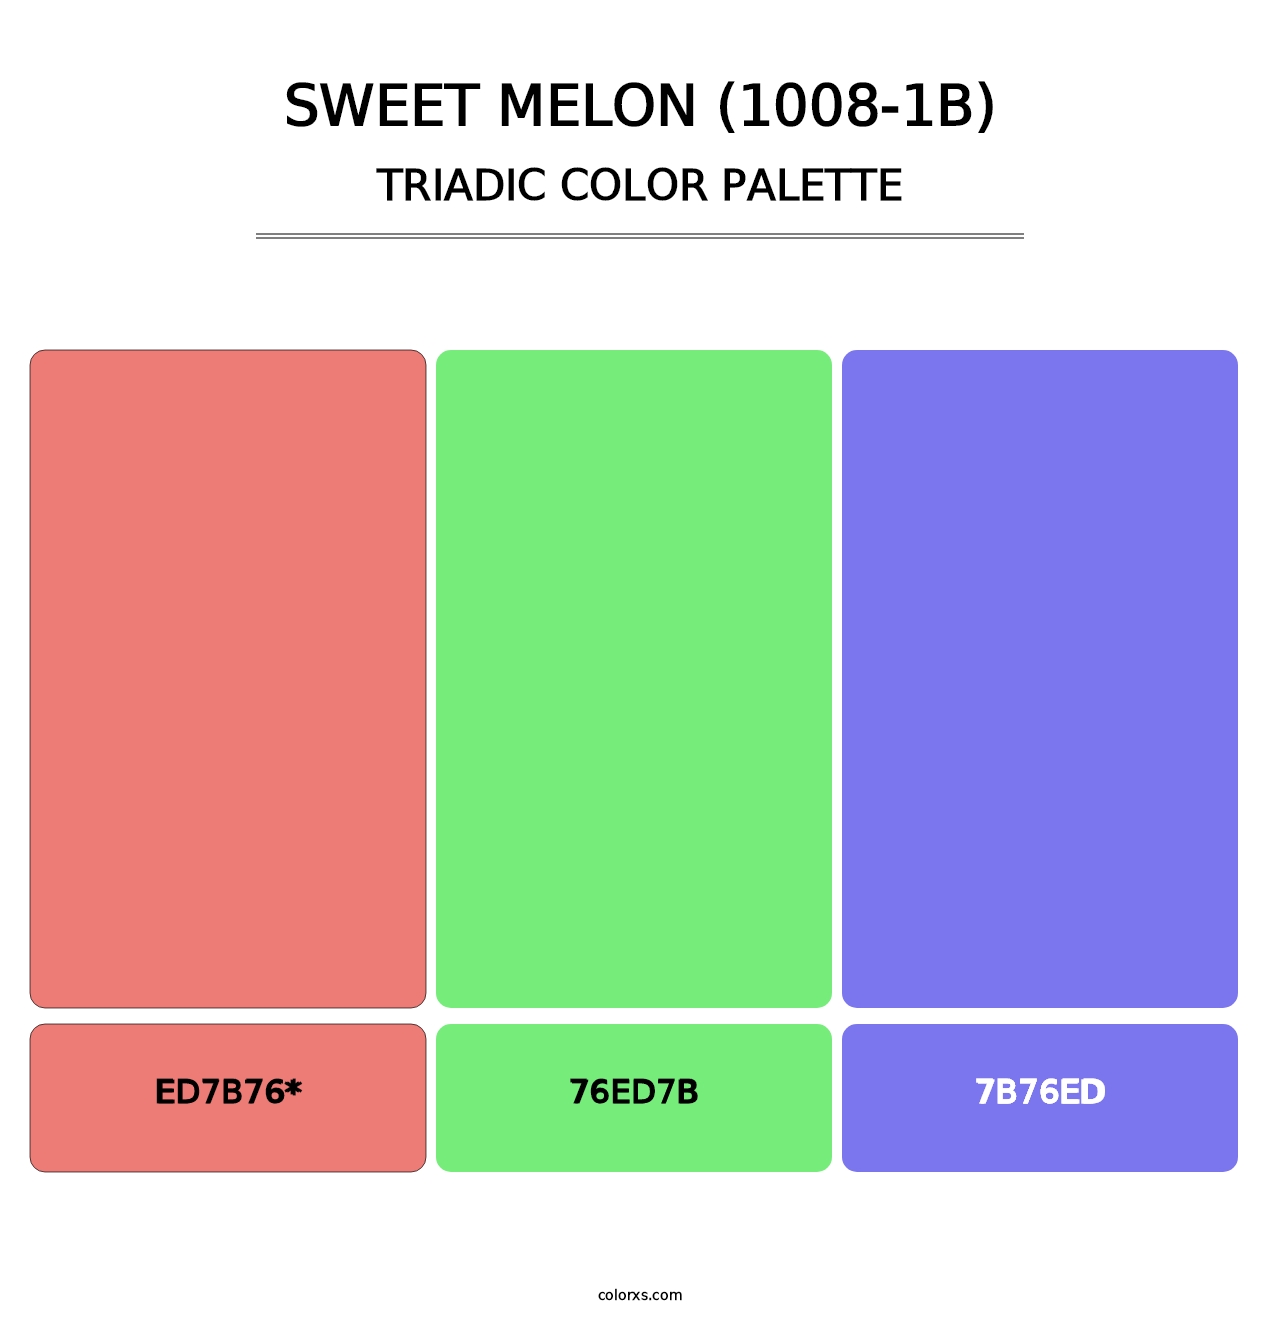 Sweet Melon (1008-1B) - Triadic Color Palette